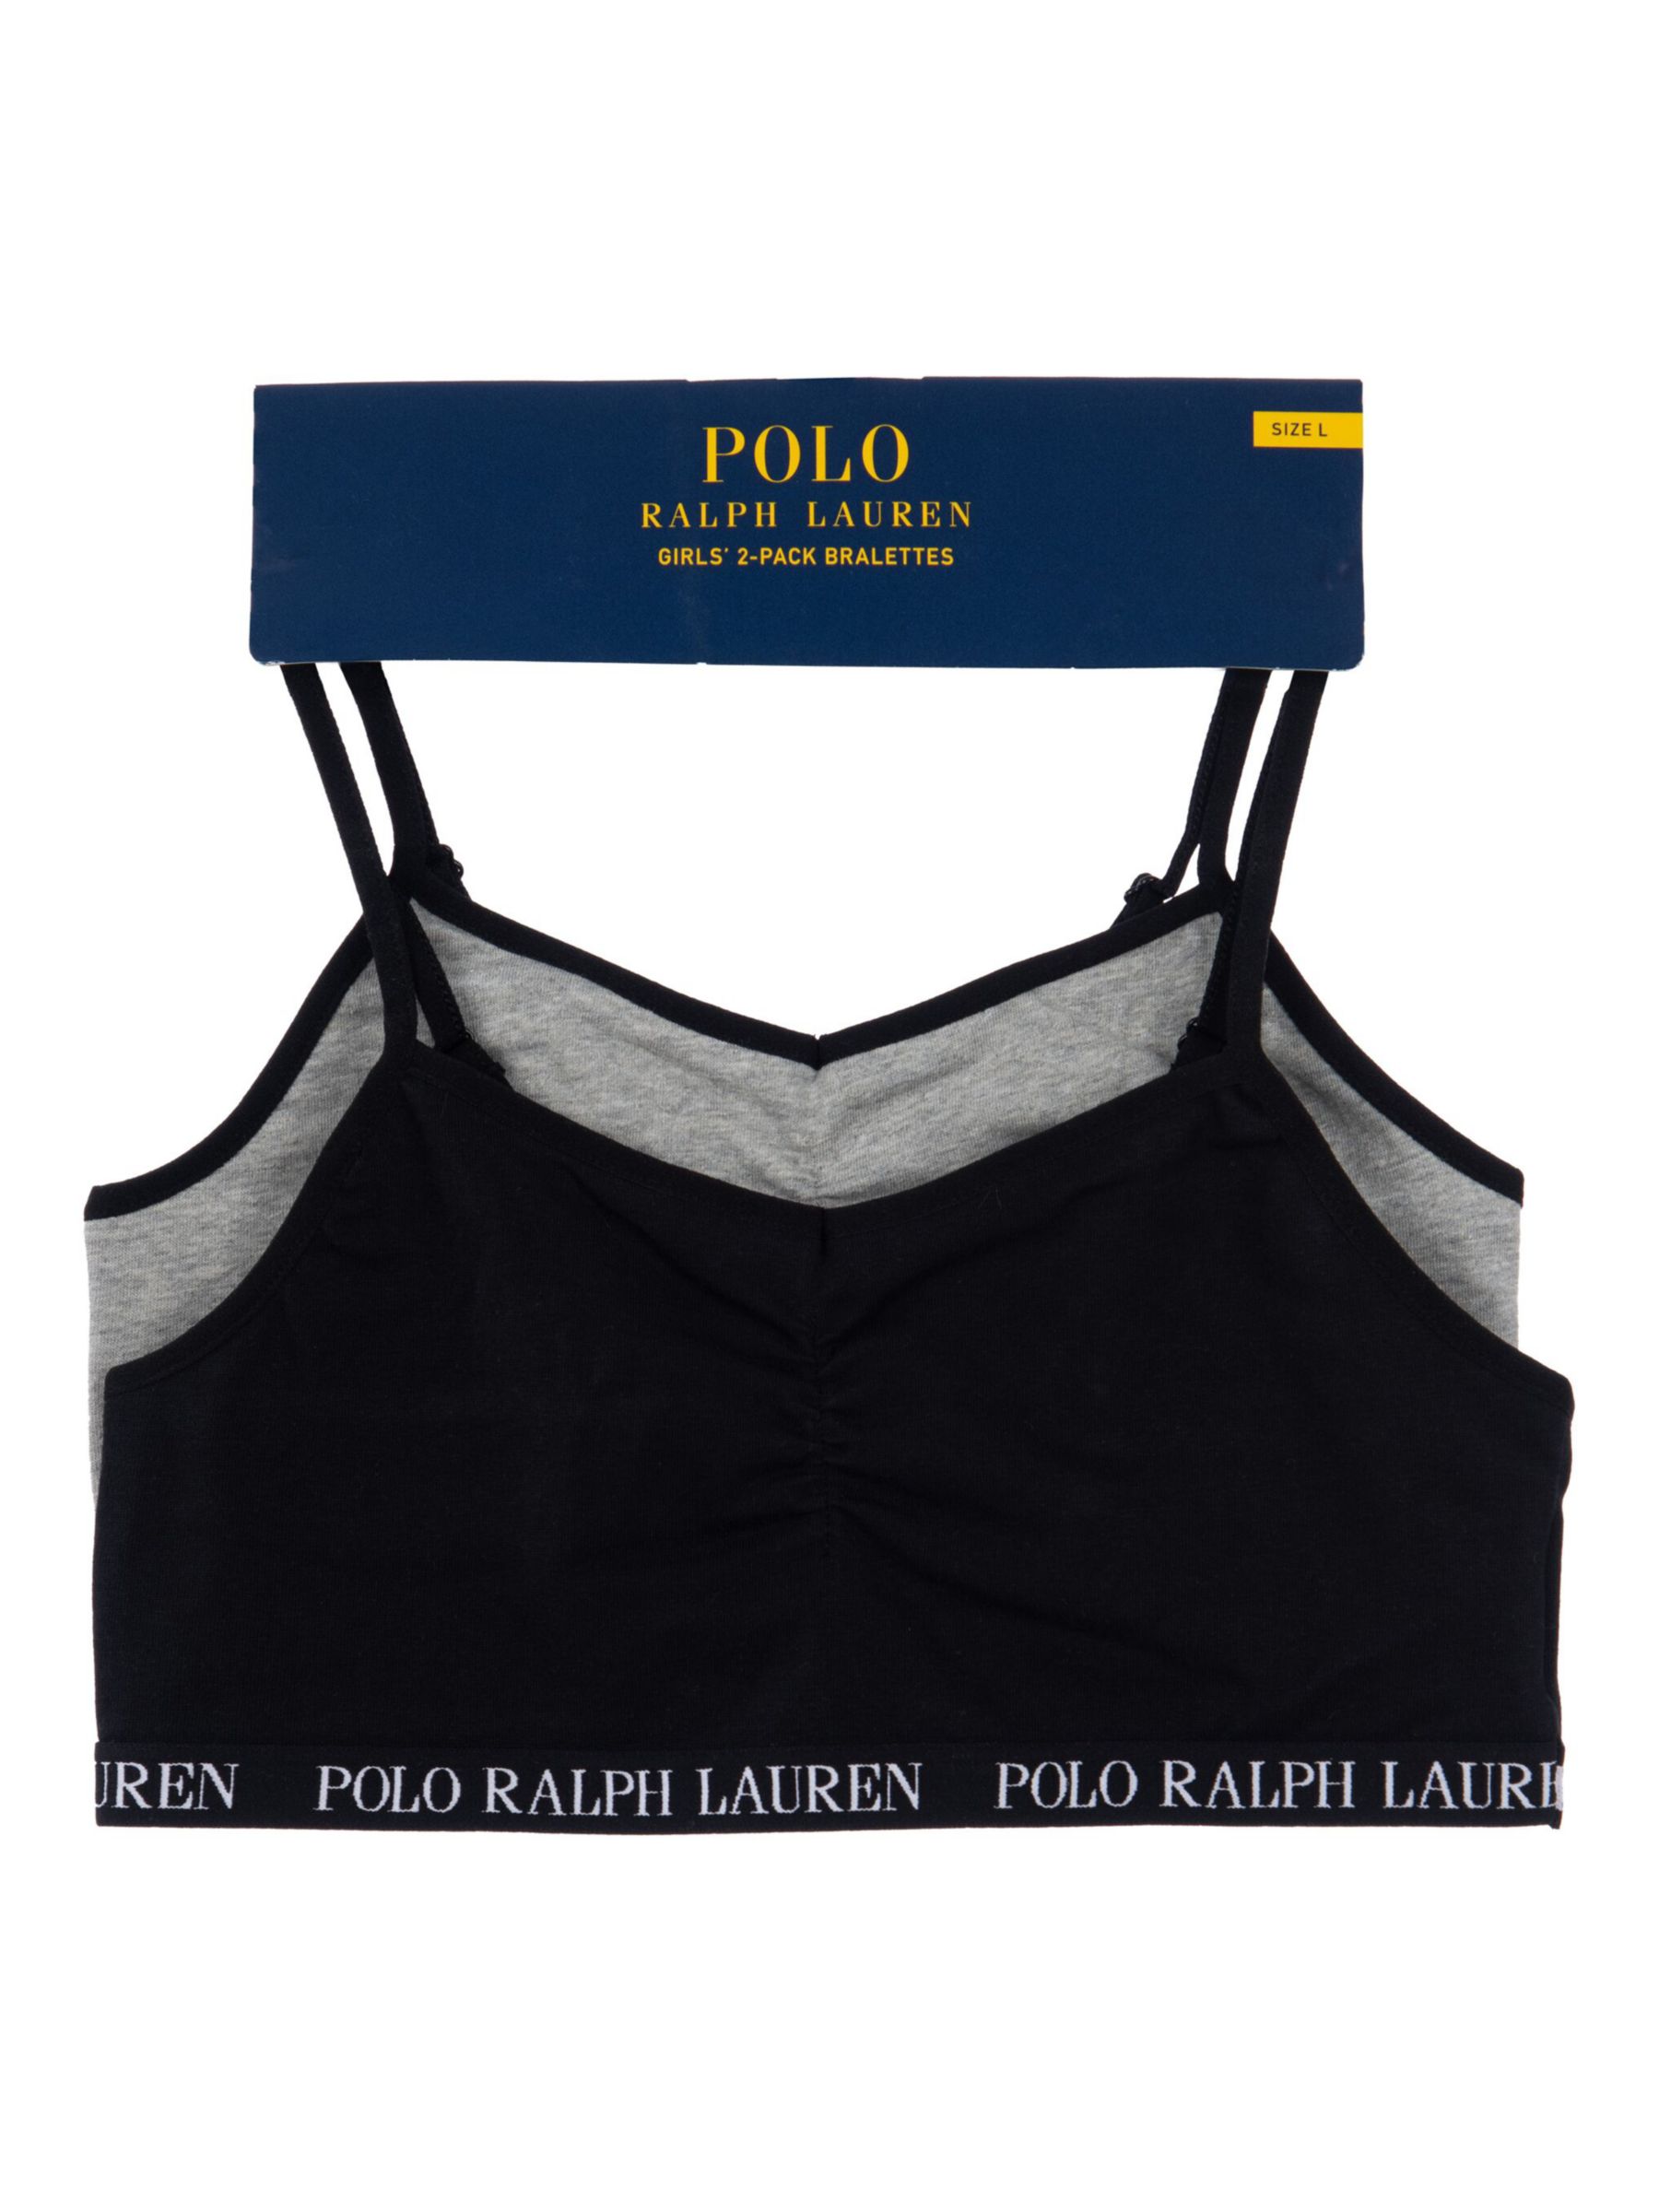 Polo Ralph Lauren Kids' Logo Solid Bralettes, Pack of 2, Black/Grey, XL